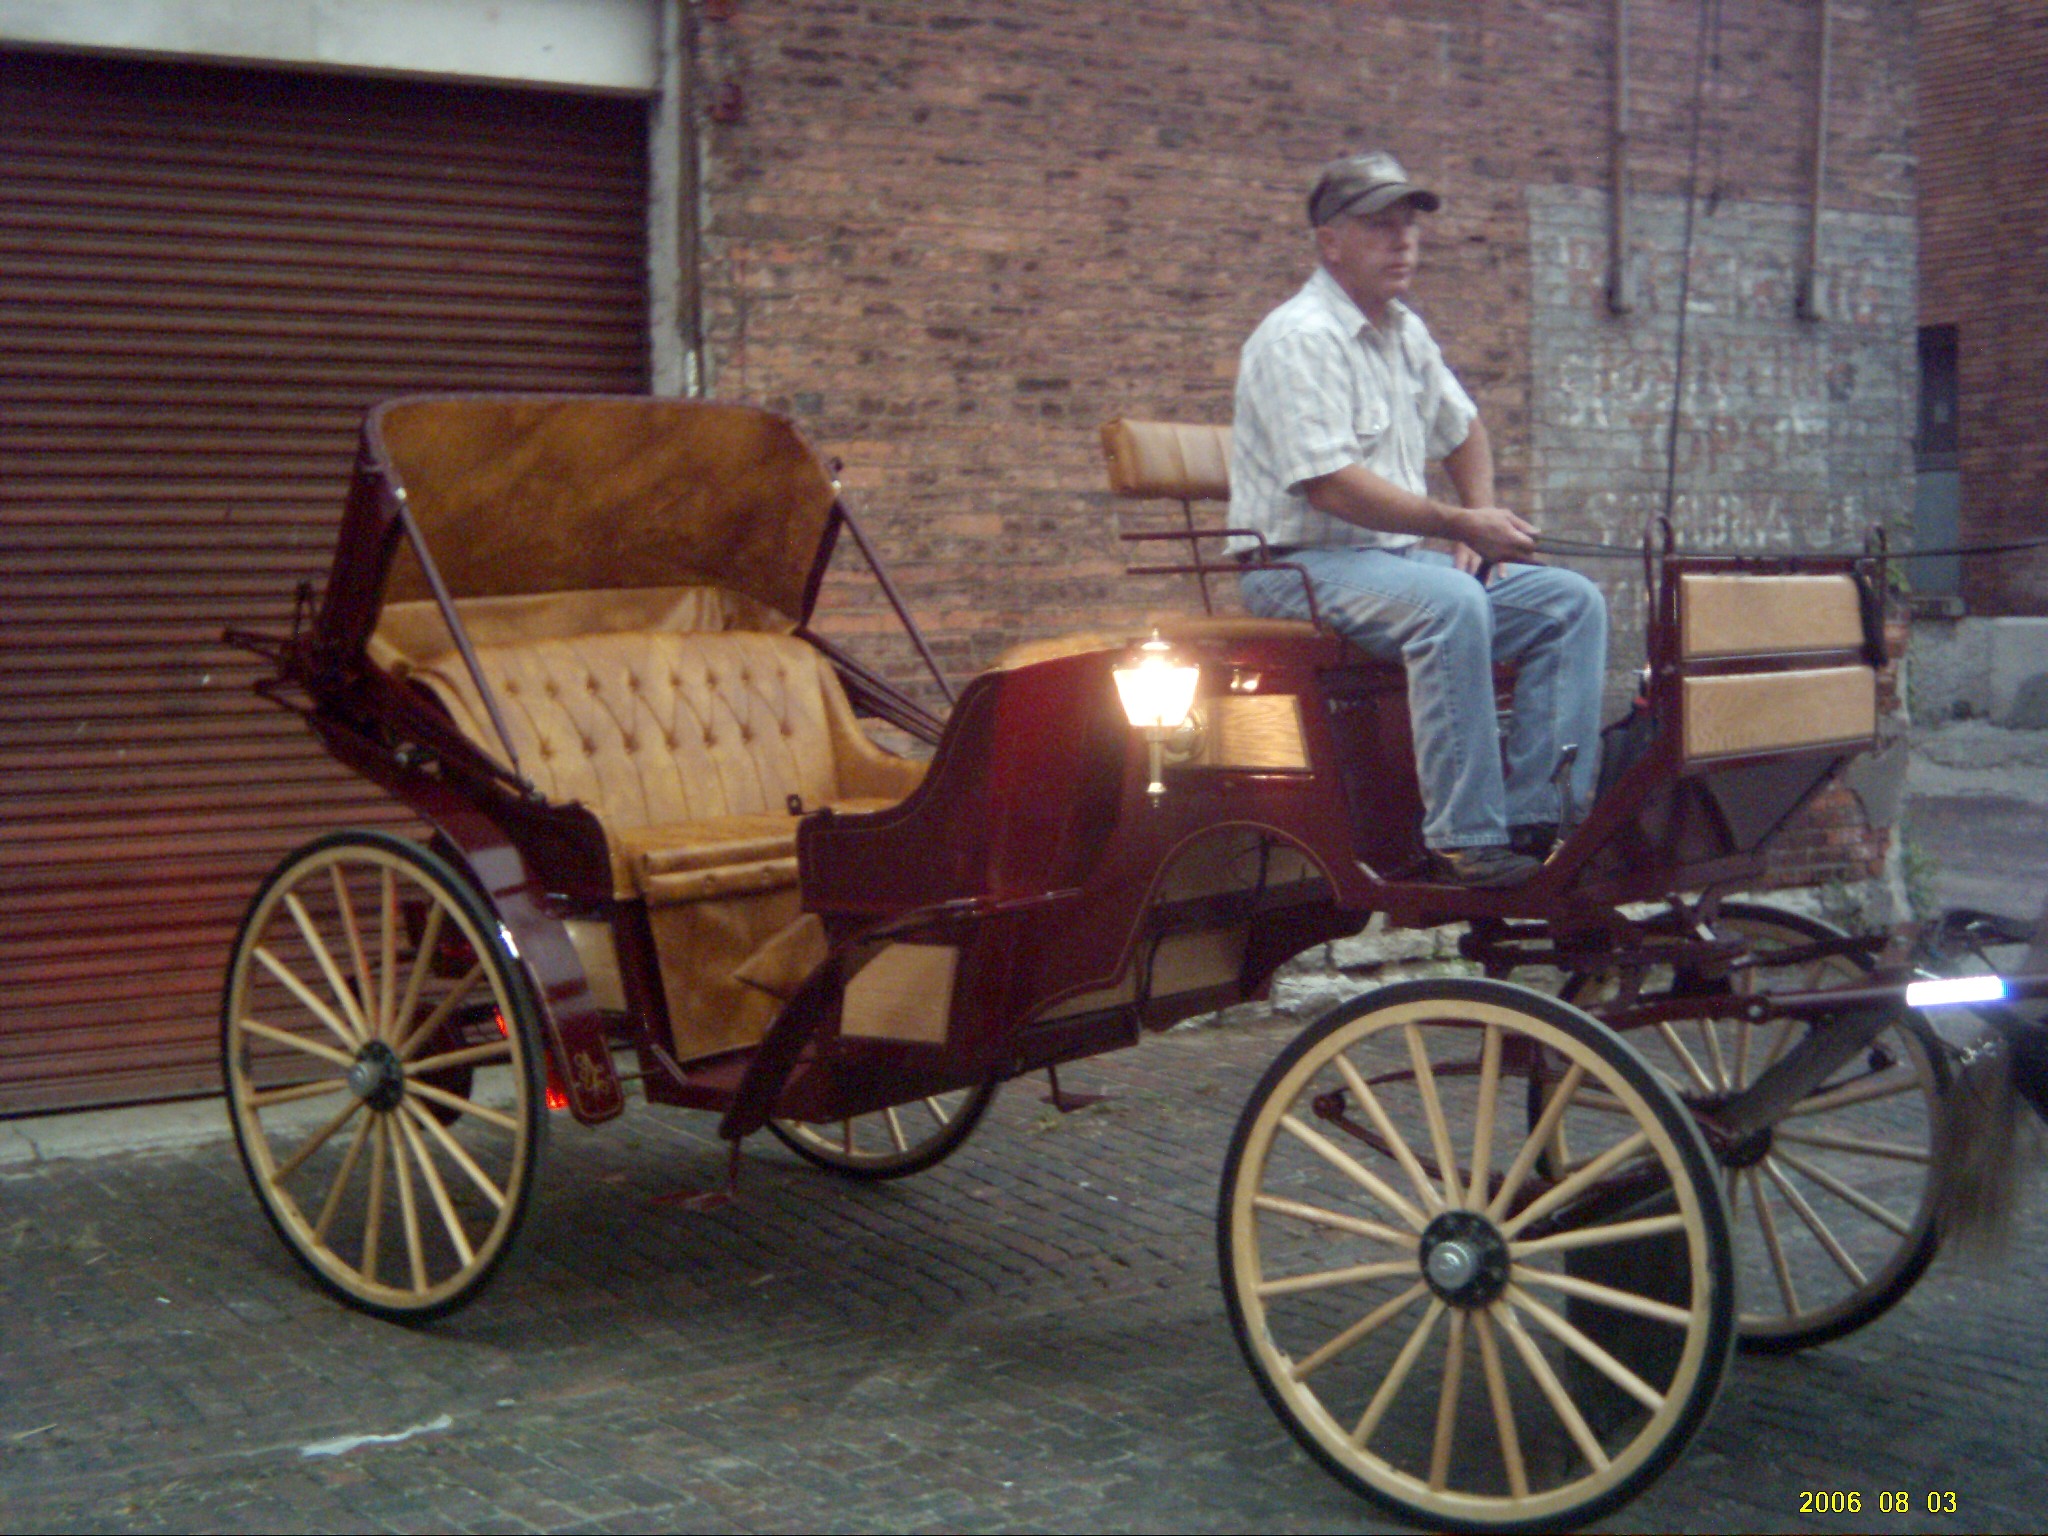 Stricking burgundy and tan wedding carriage used in Cincinnati Ohio - OH, Covington Kentucky - KY, Newport Kentucky - KY and surrounding areas